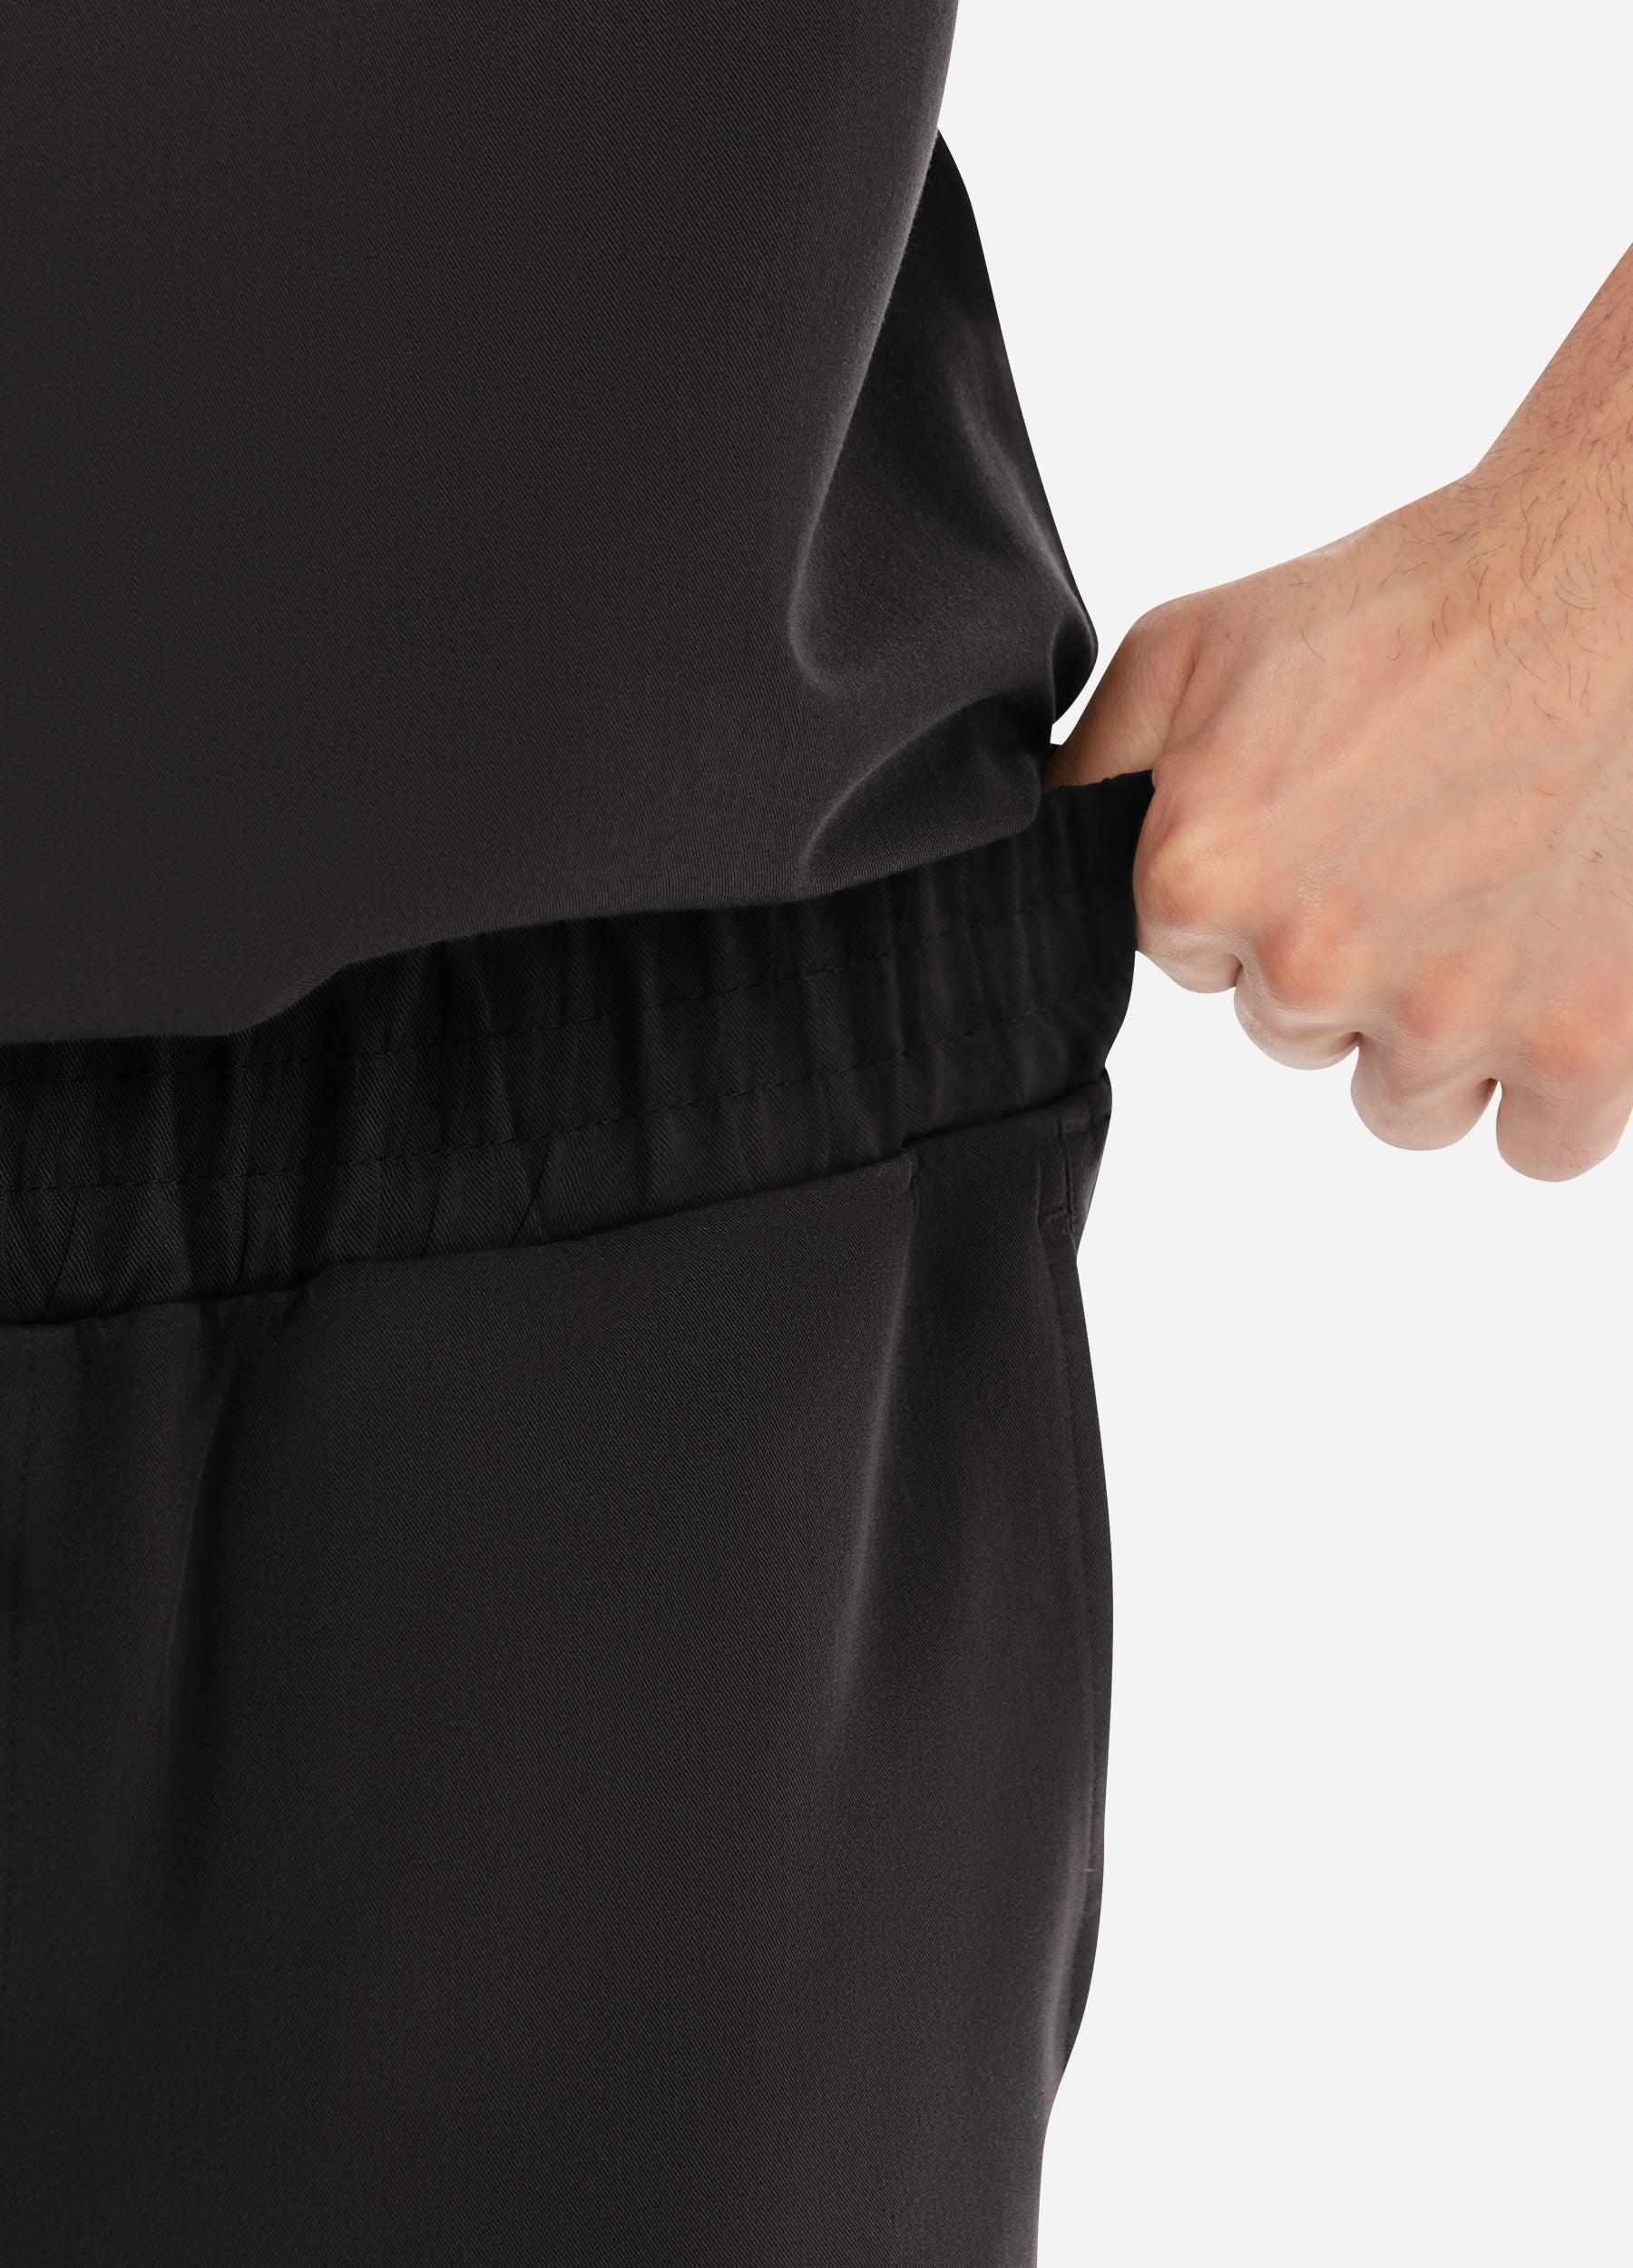 Pantalón médico ajustado de 4 bolsillos para hombre